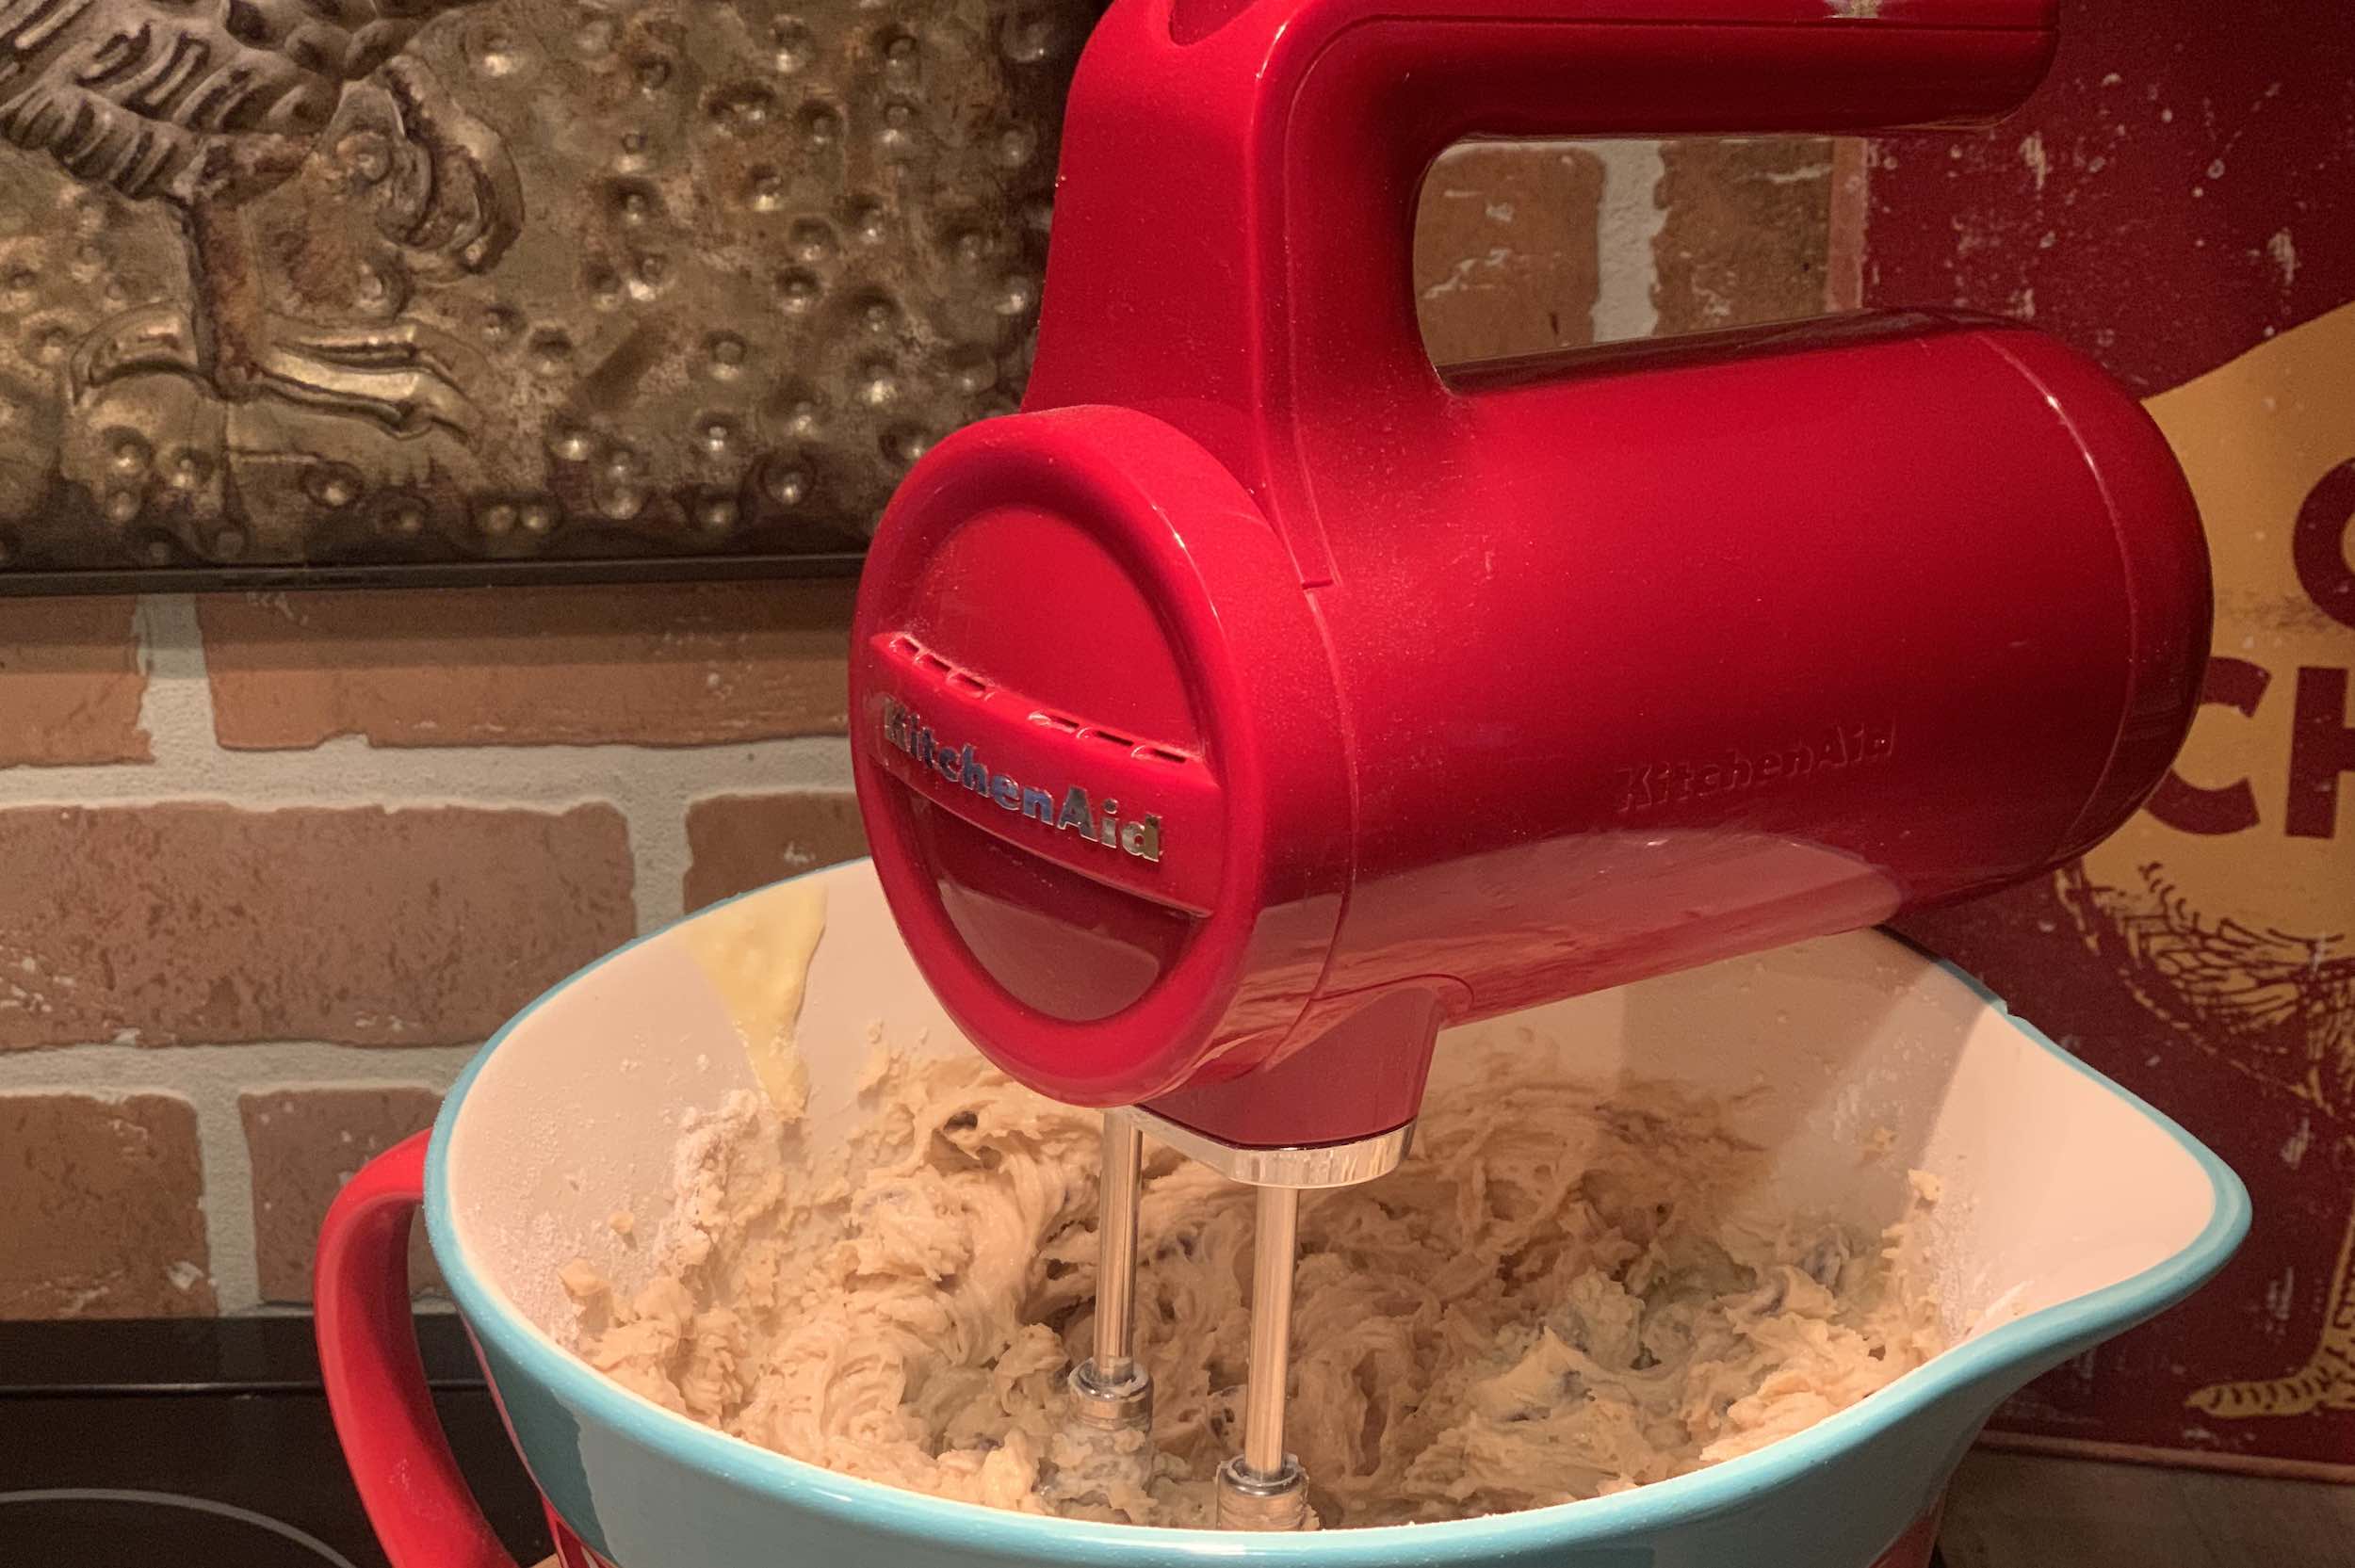 KitchenAid cordless 7 speed hand mixer review